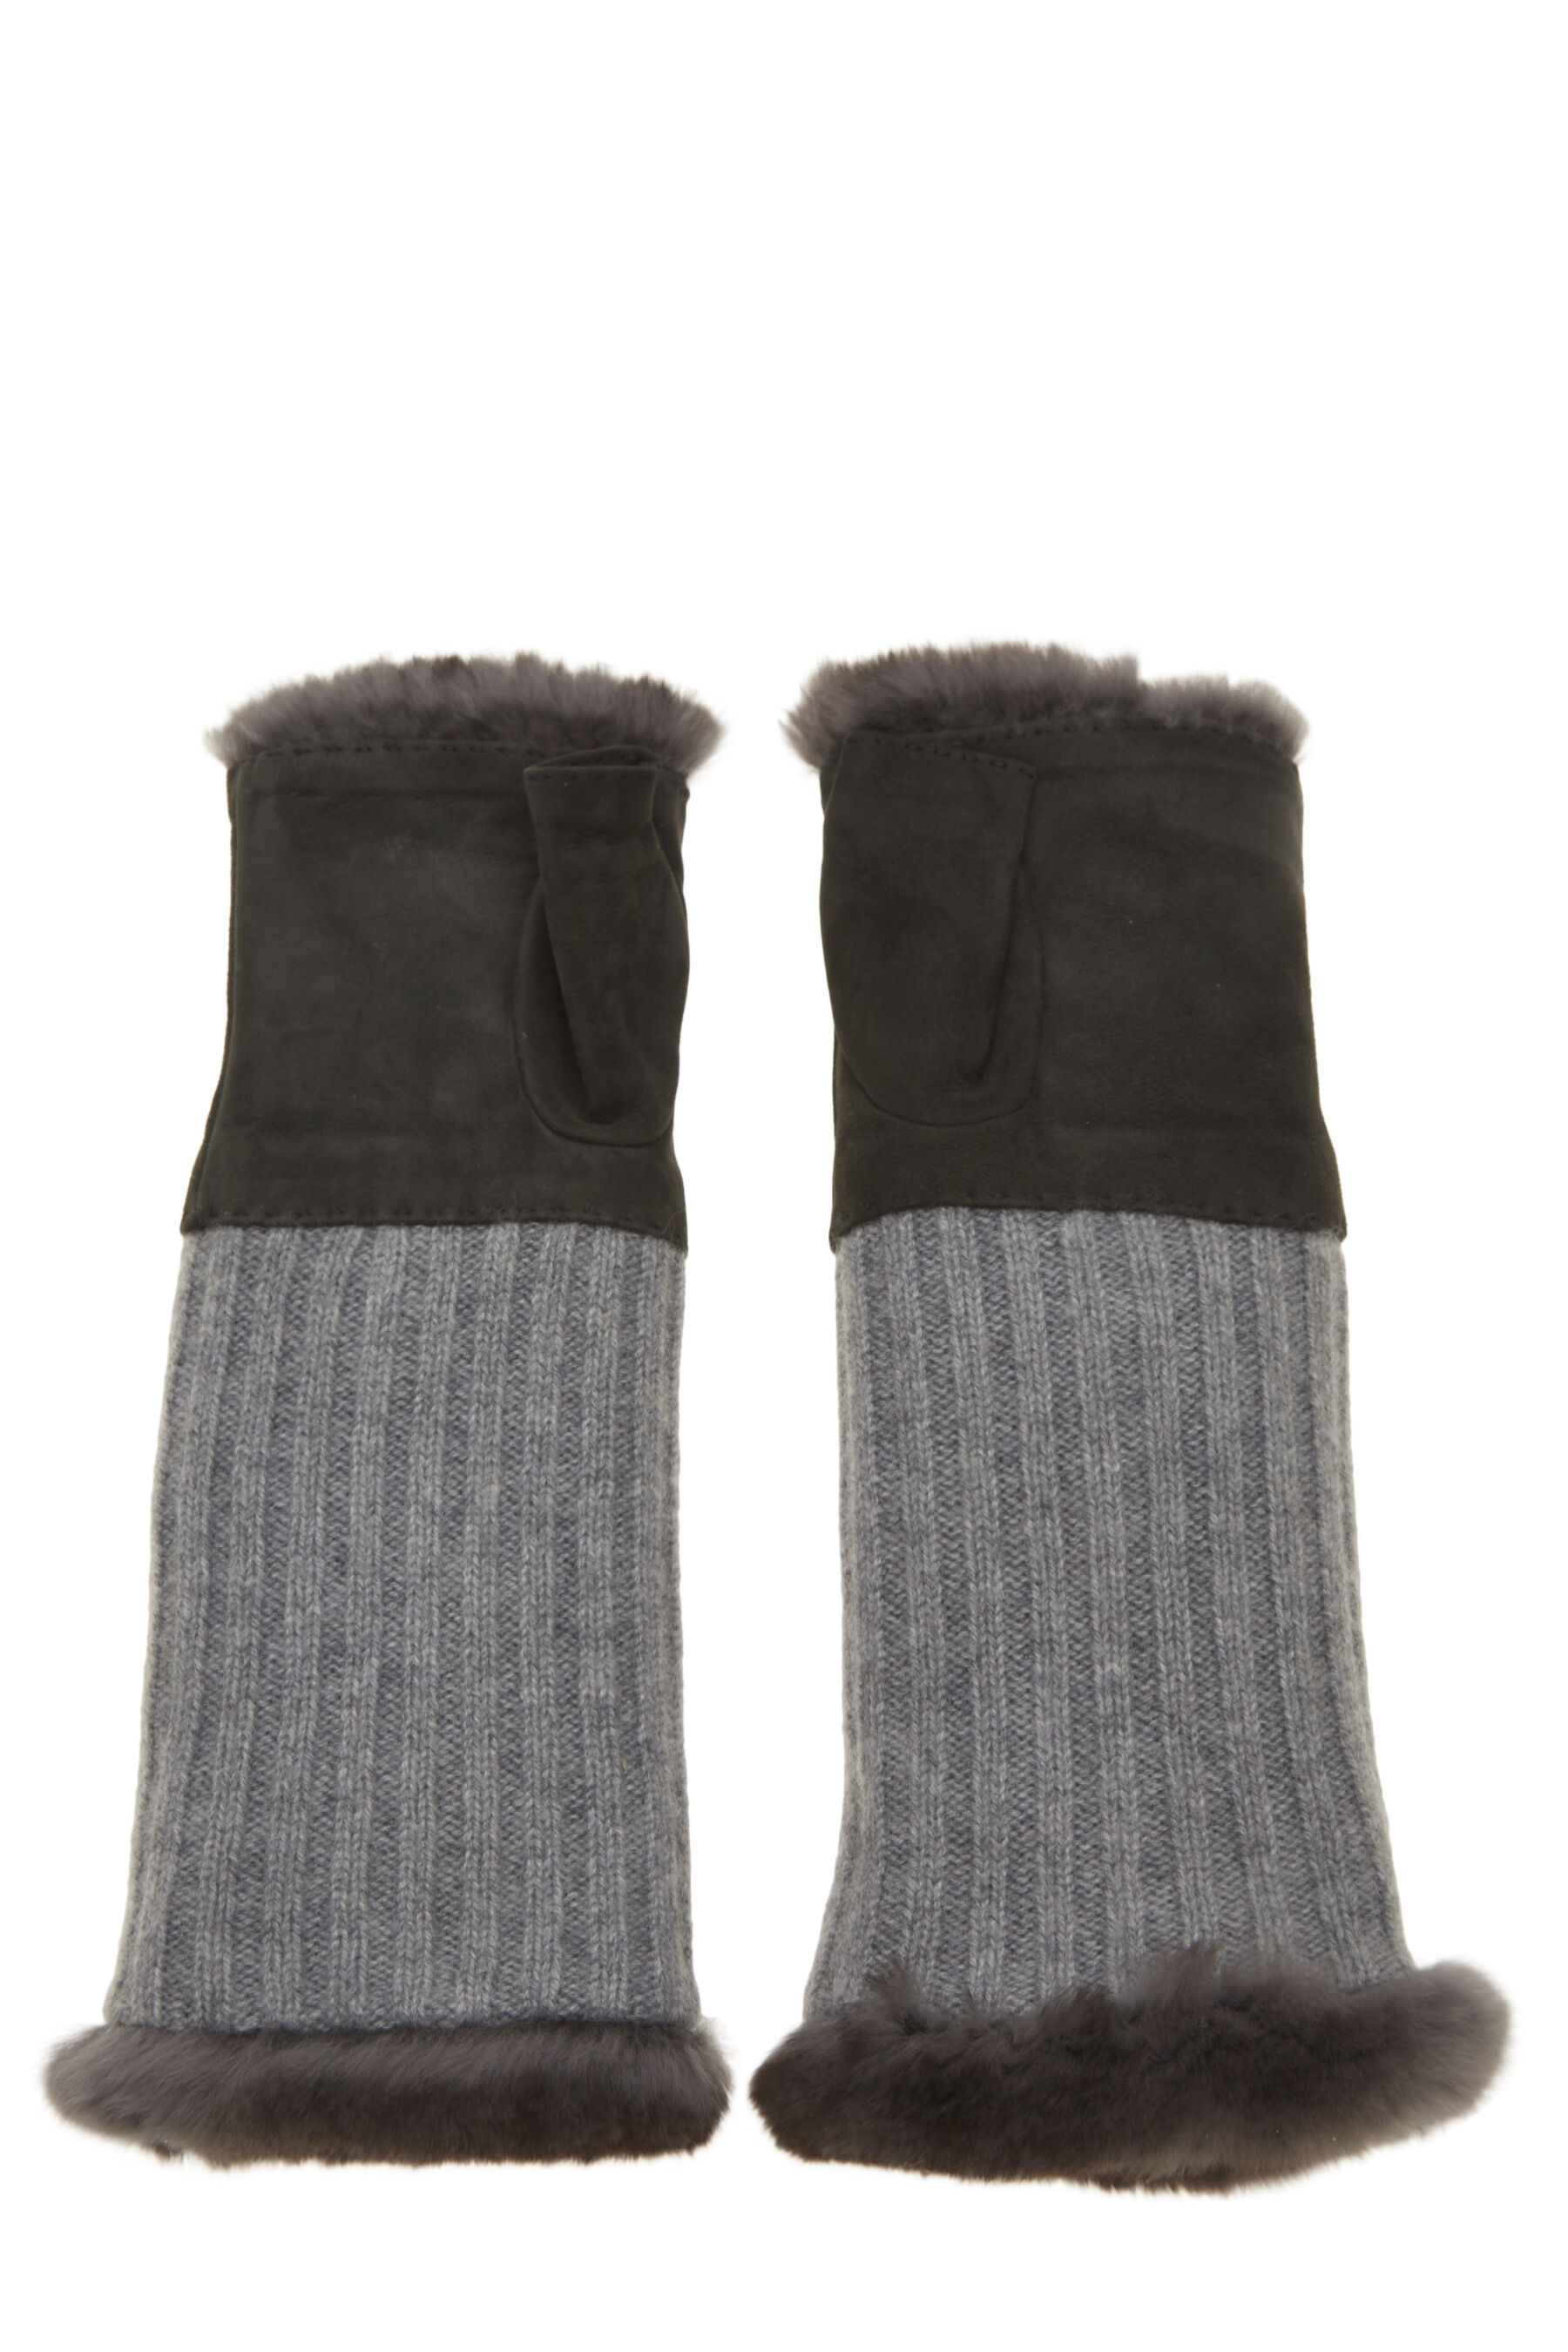 Chanel Grey Fur-Trimmed Fingerless Gloves Q6A2SAACEB001